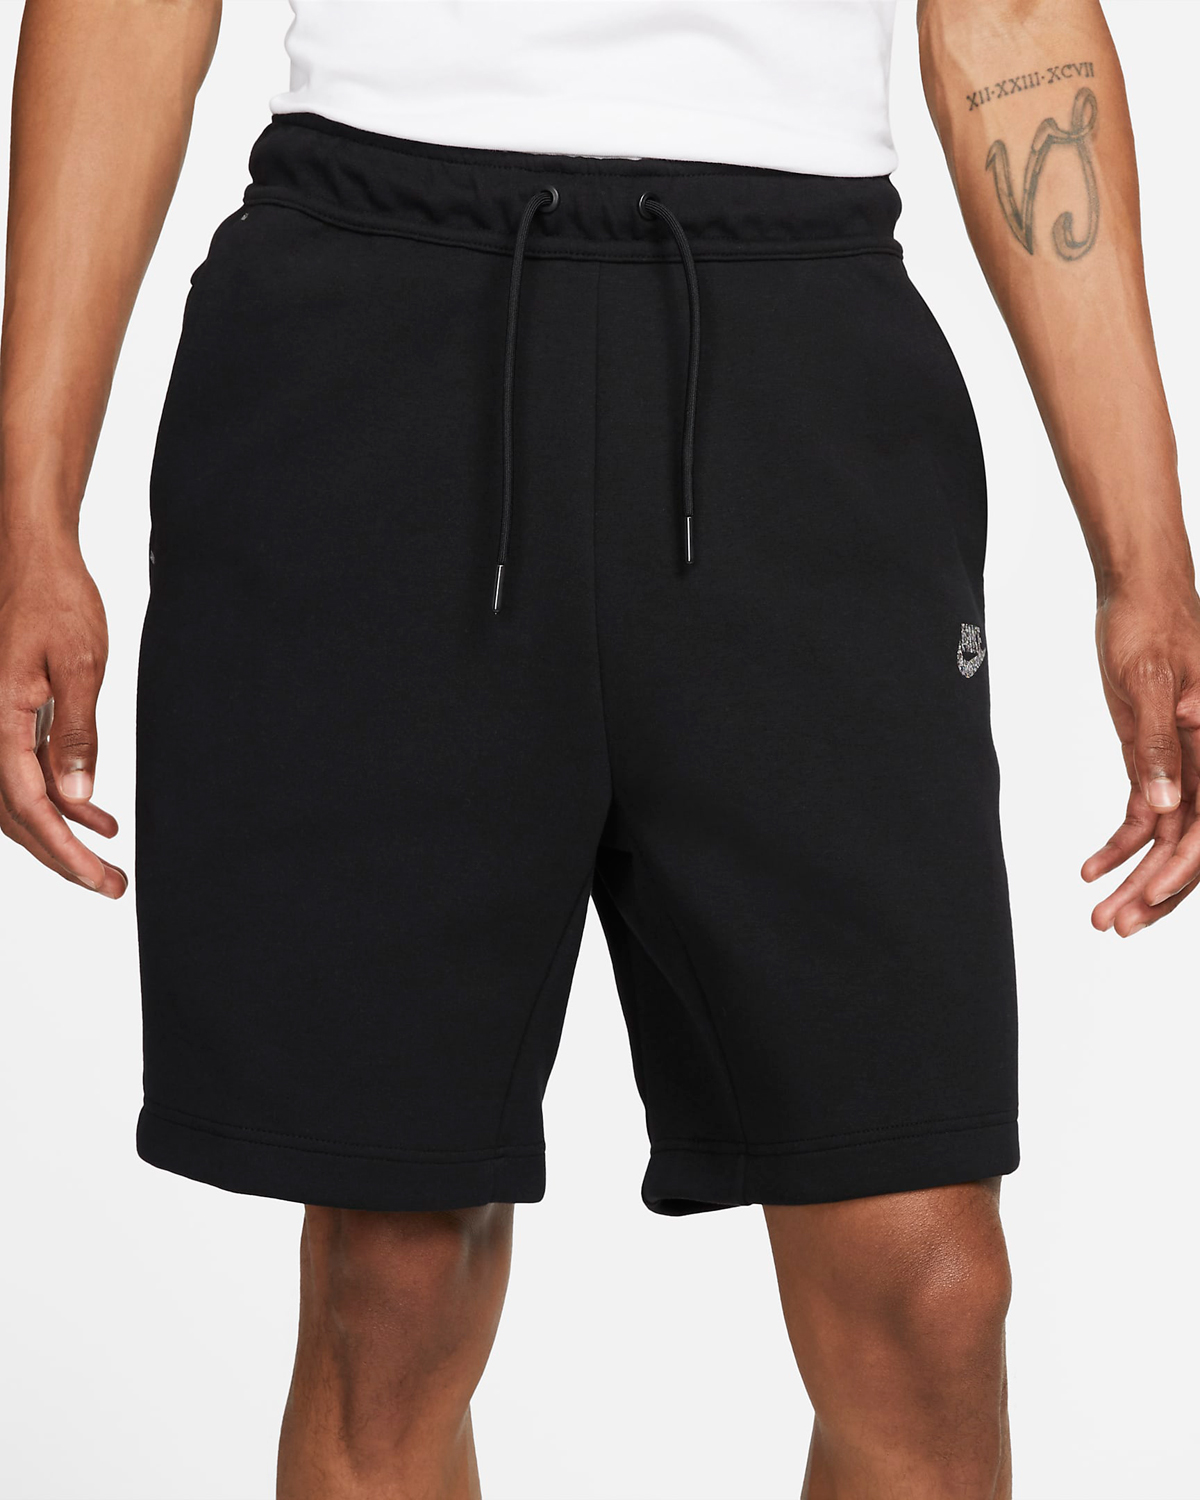 Nike-Tech-Fleece-Shorts-Black